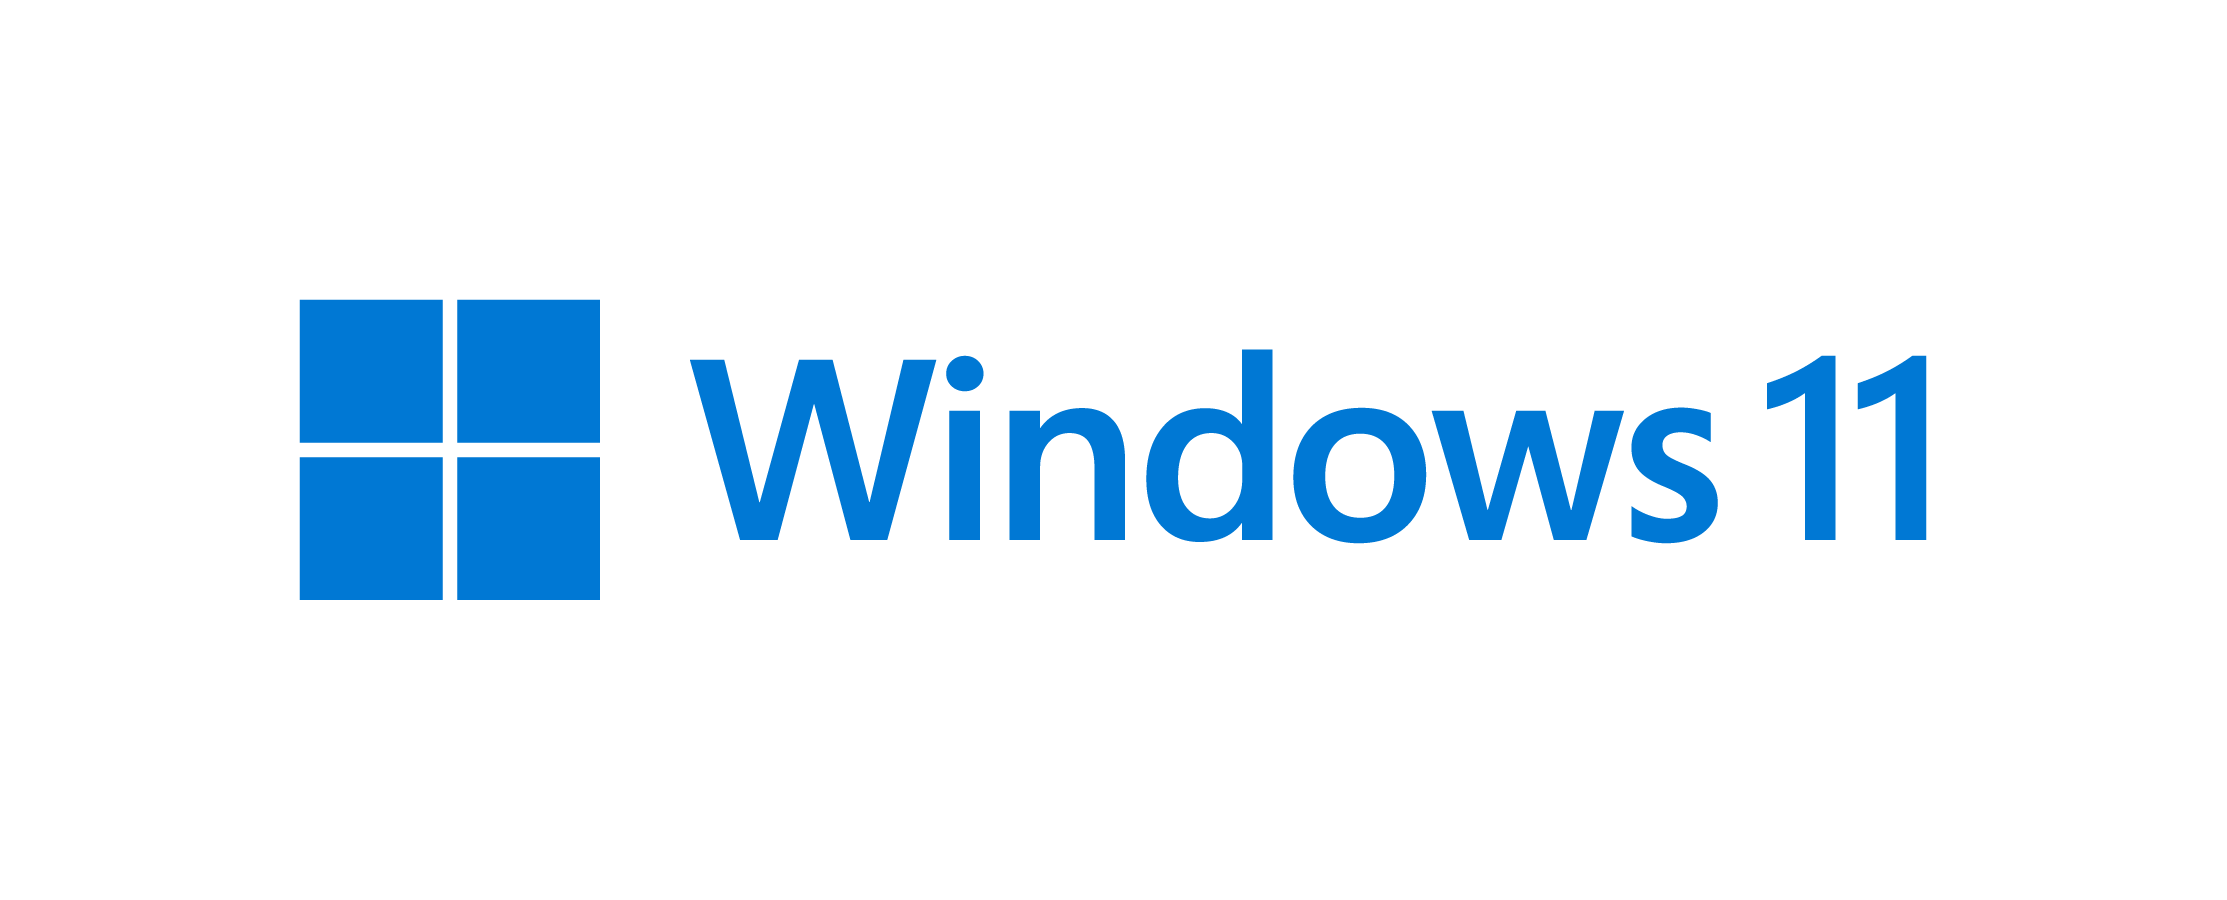 Introducing Windows 11 – Press materials for Windows 11 news